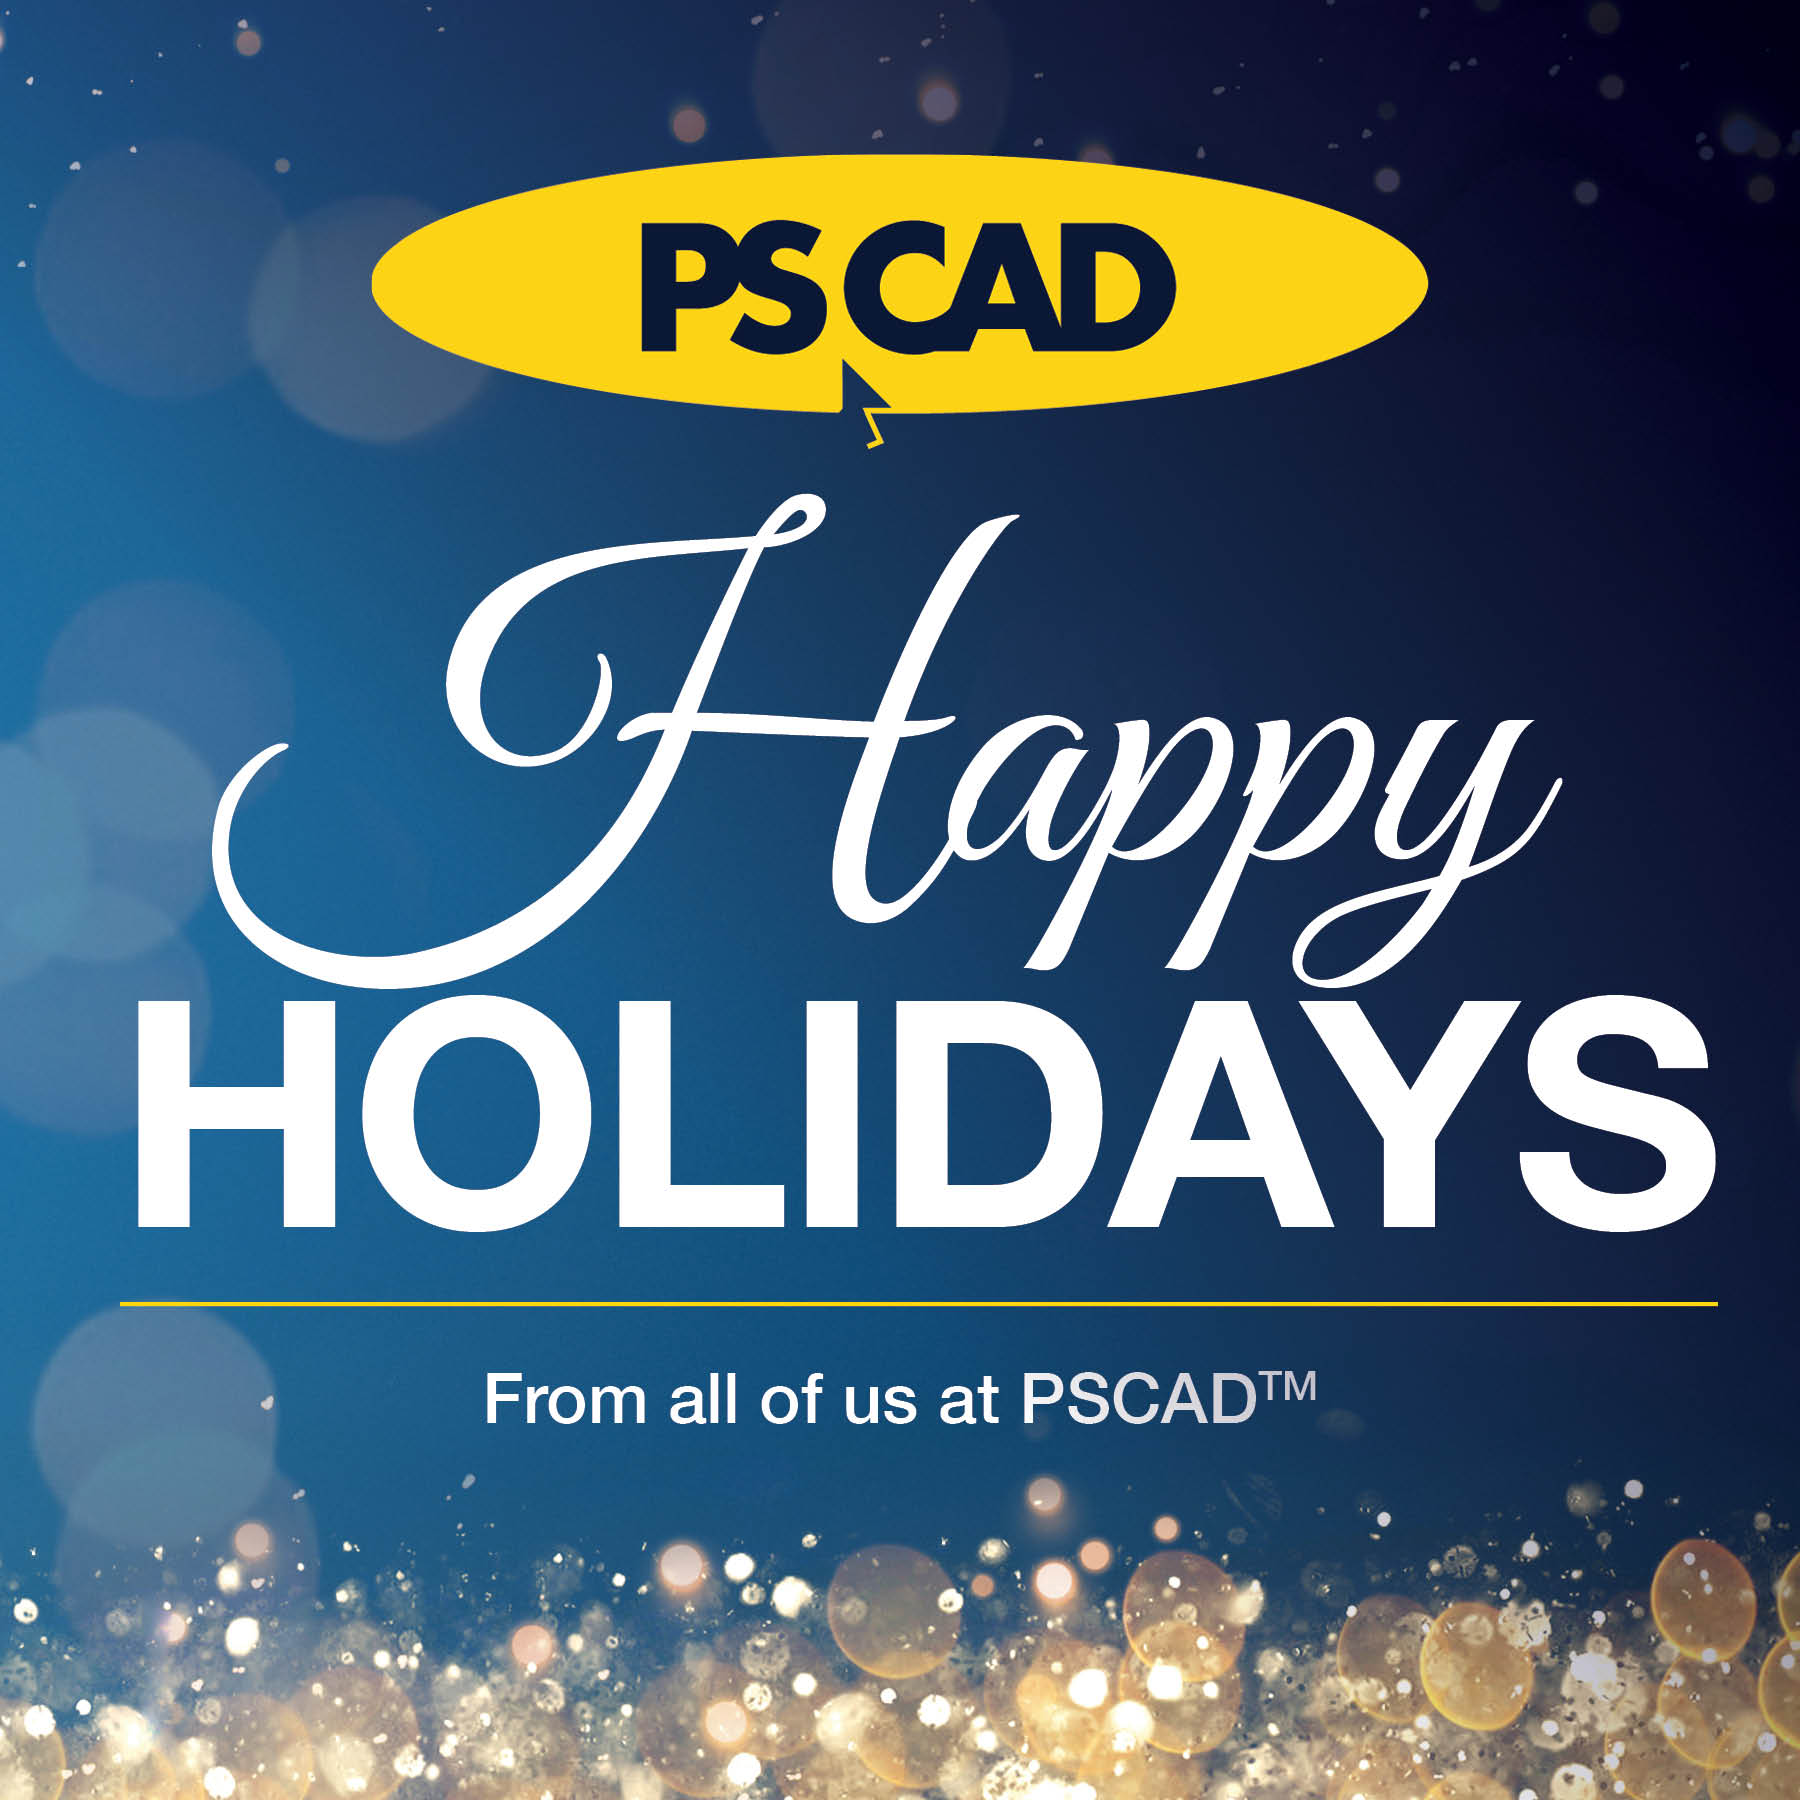 PSCAD Holiday Card 20232.jpg (236 KB)